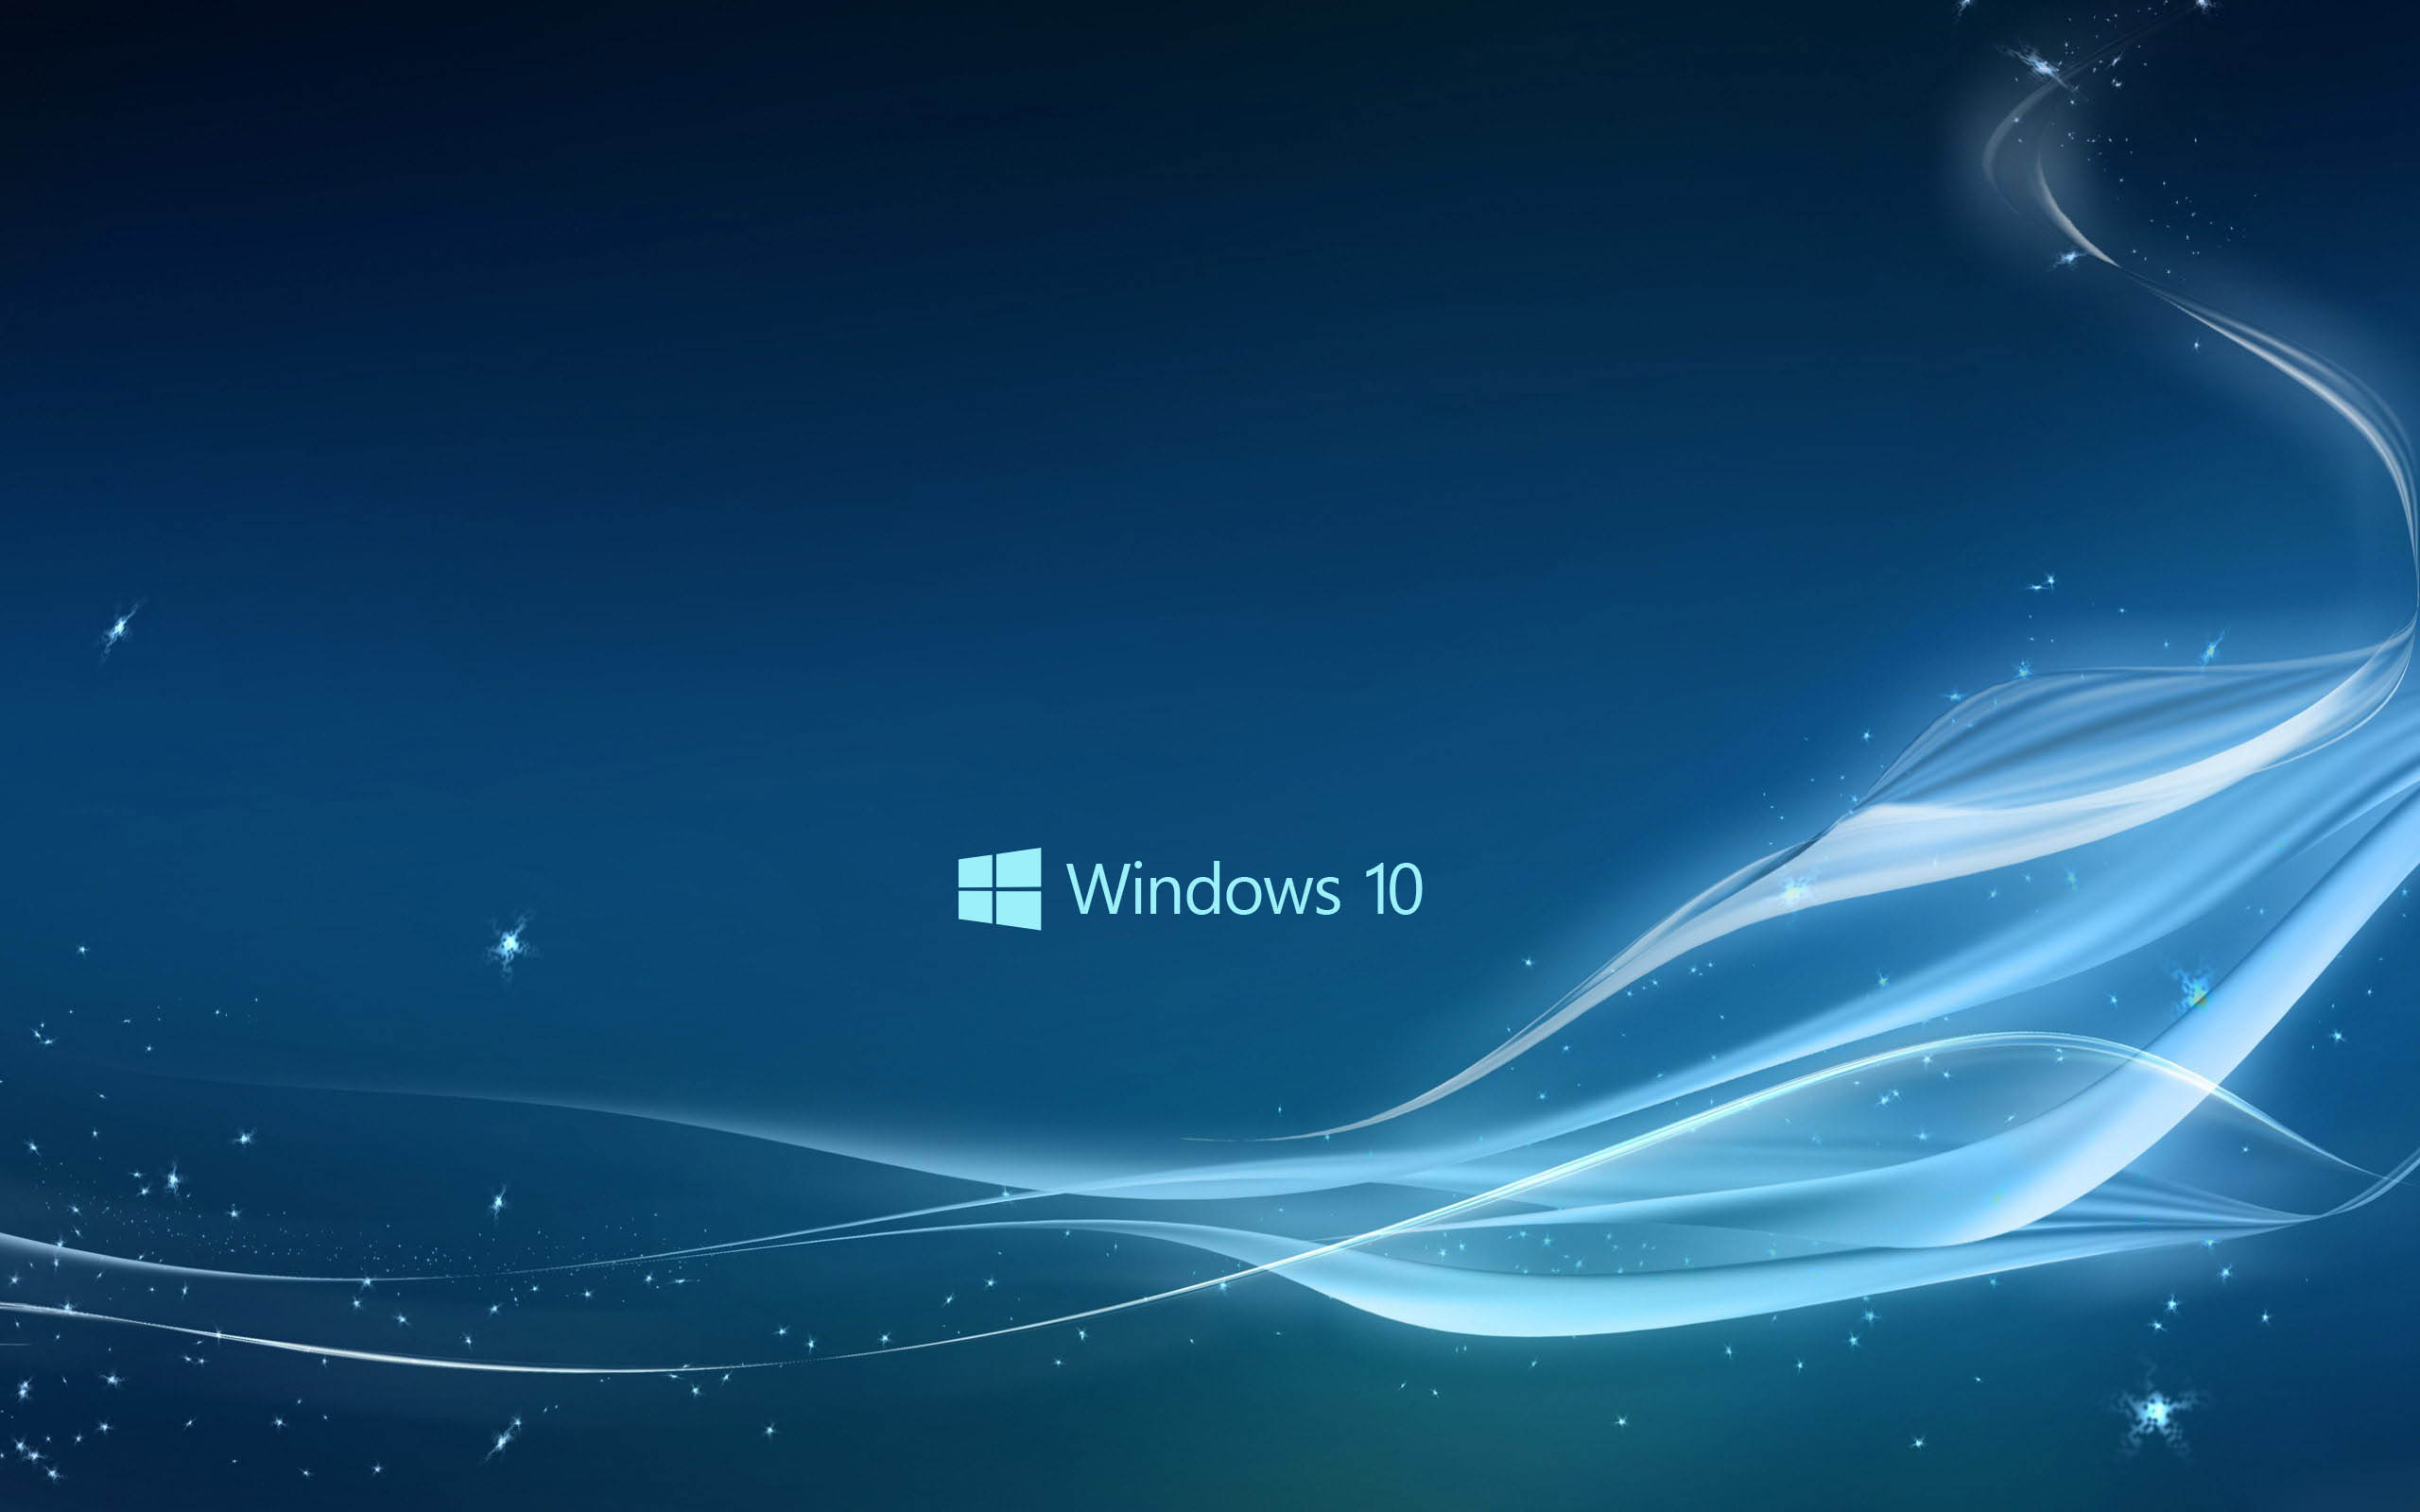 Windows 10 Wallpaper | Wallpapers, Backgrounds, Images, Art Photos.